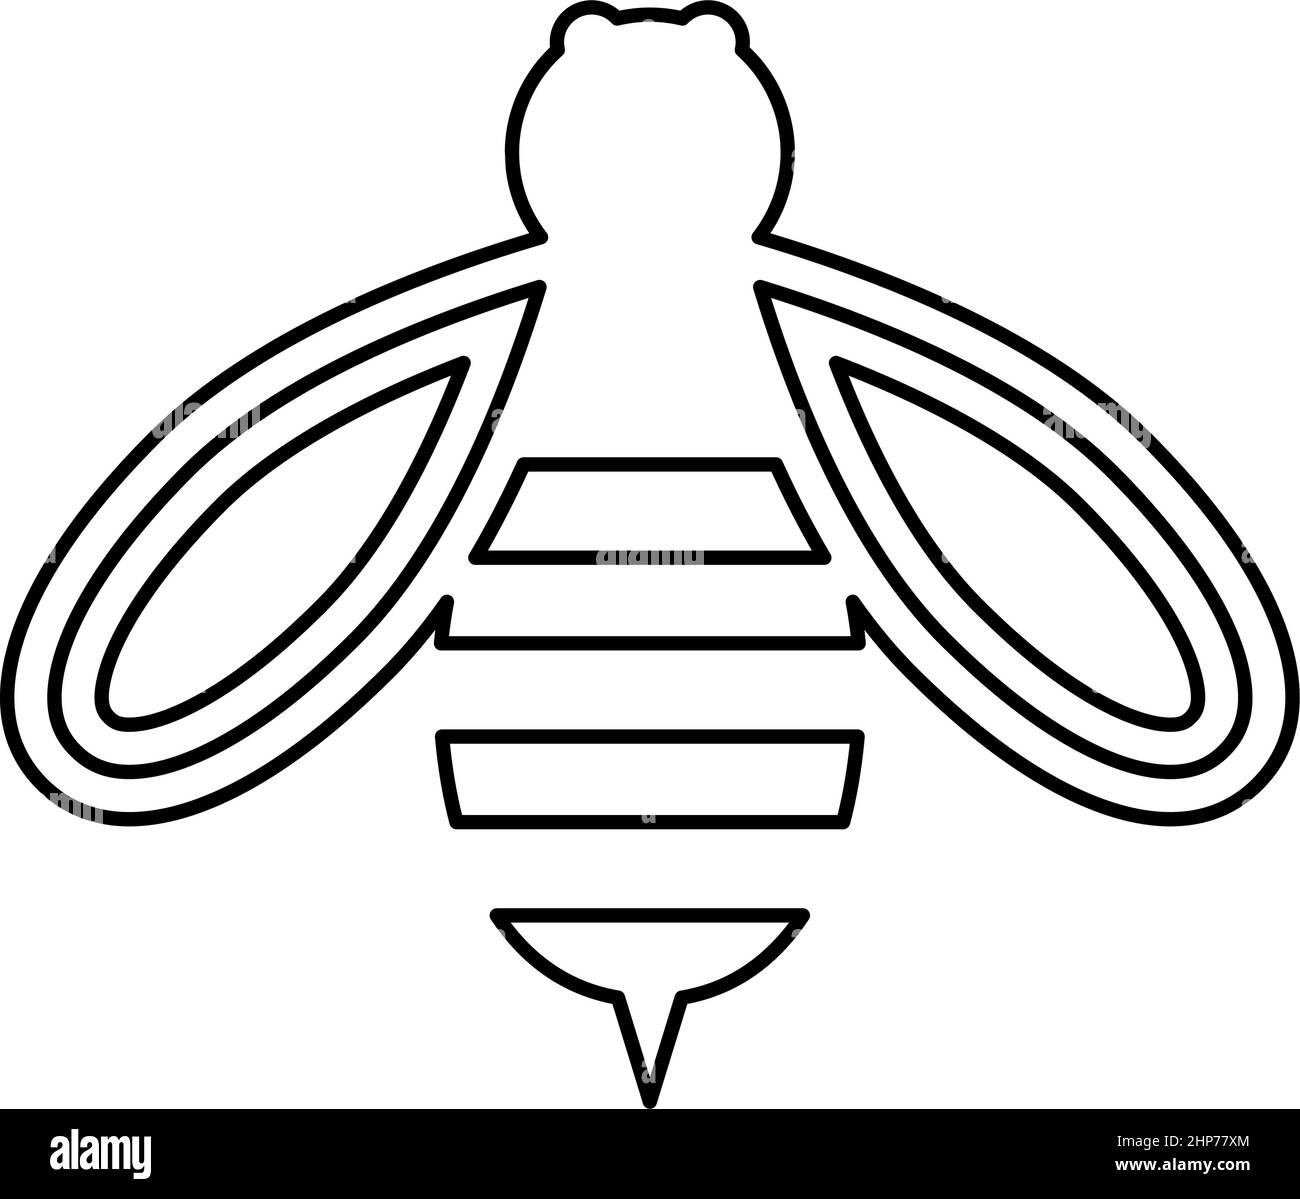 Biene Honig Kontur Umriss Symbol schwarze Farbe Vektor Illustration flachen Stil Bild Stock Vektor